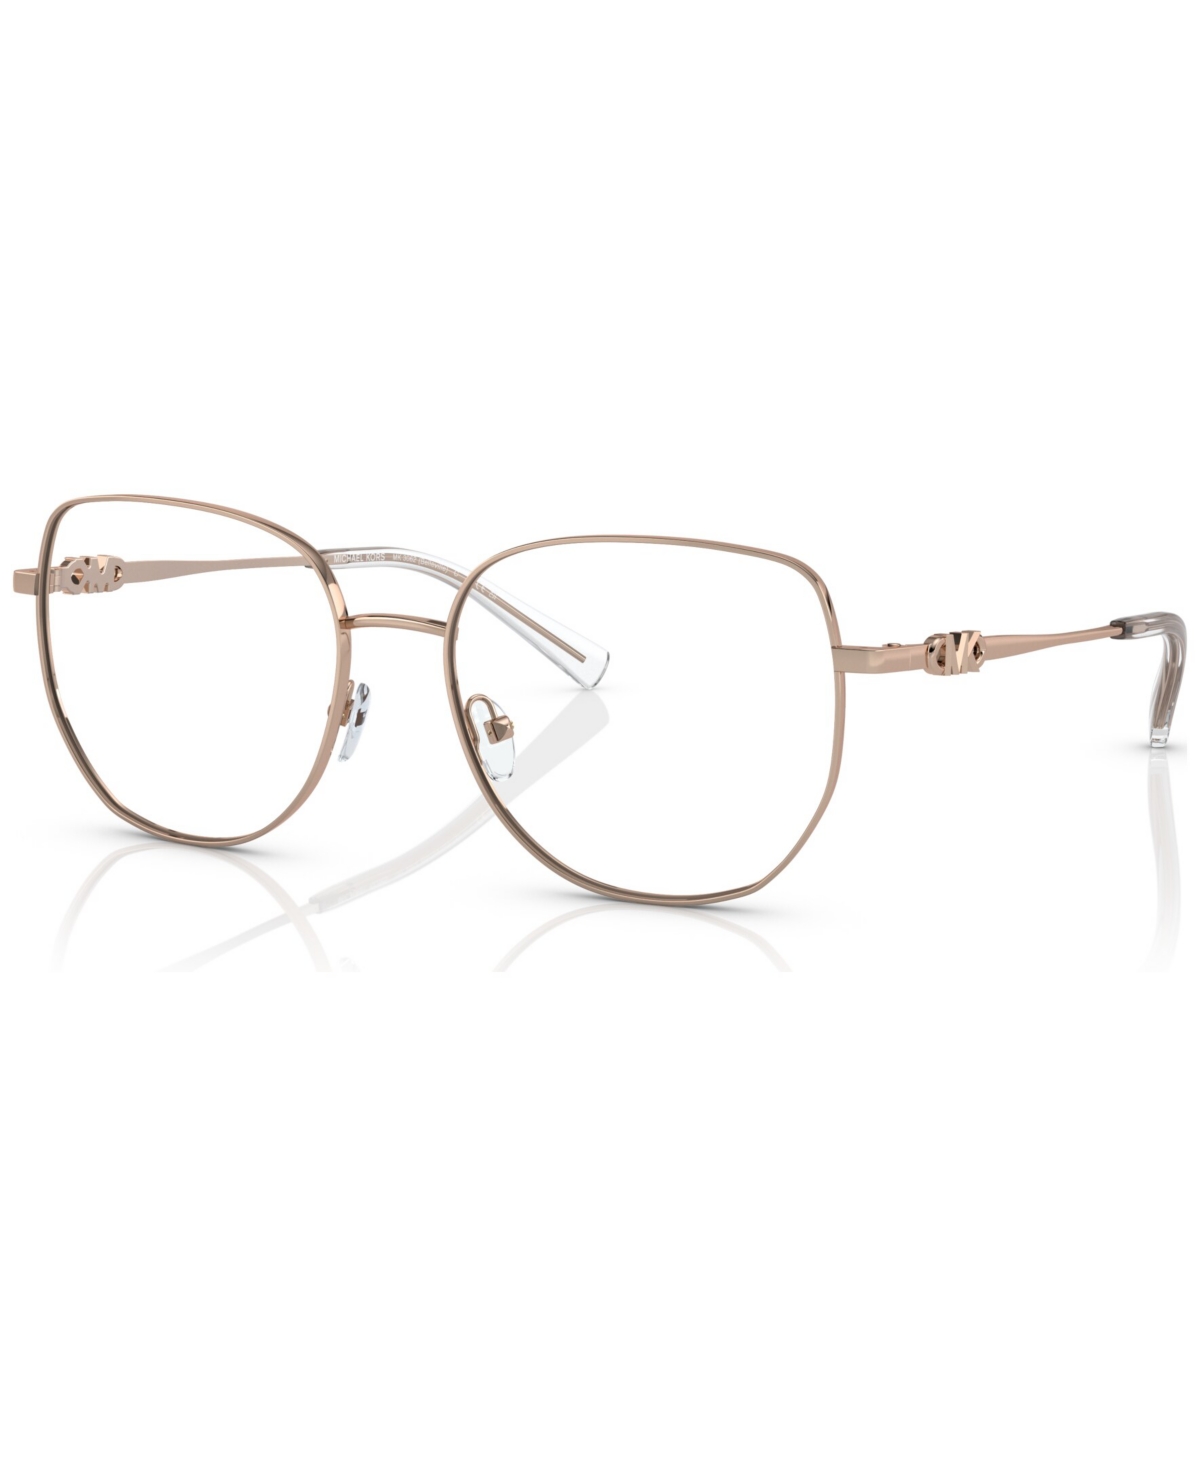 Women's Square Eyeglasses, MK306254-o - Rose Gold Tone